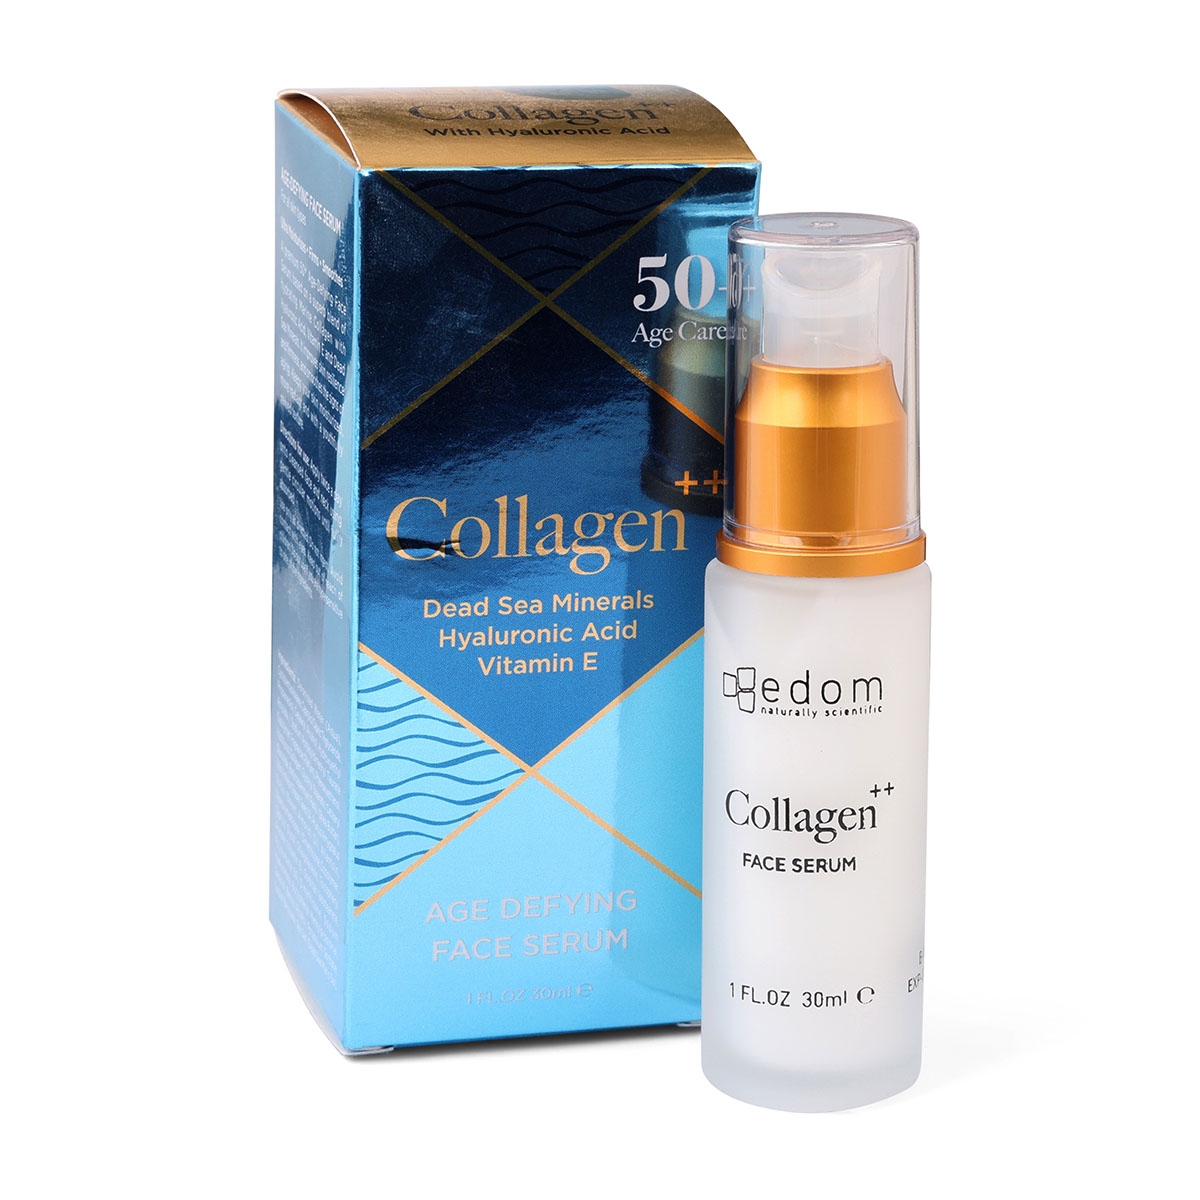 Edom Dead Sea Collagen Age-Defying Face Serum 50+ - 1